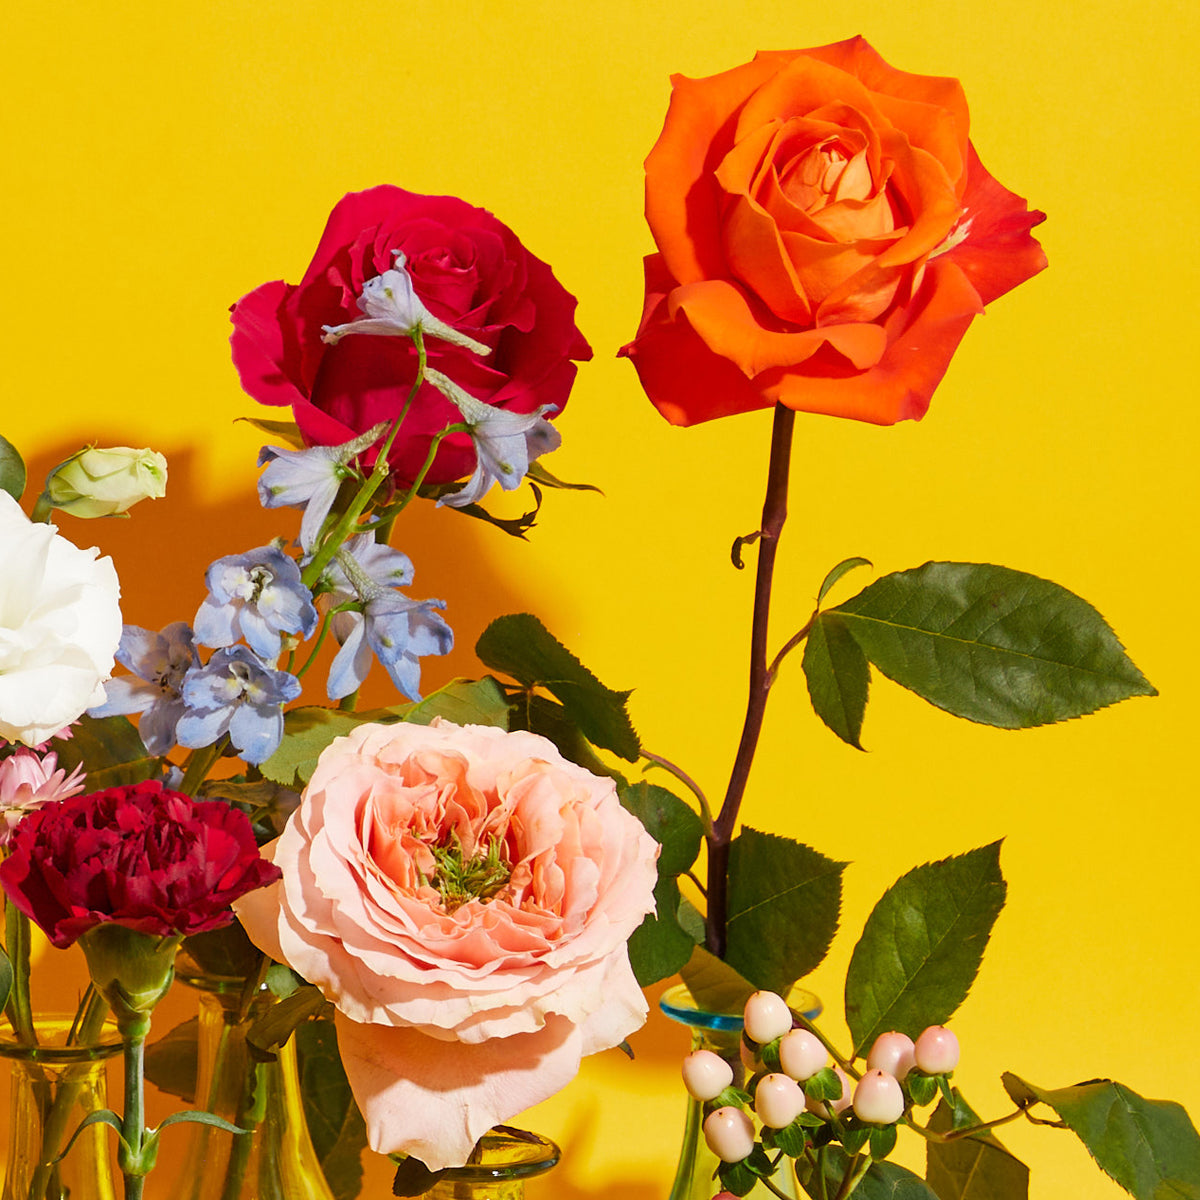 Designer Blooms Choice Vase - Bright and Cheerful DB Studio